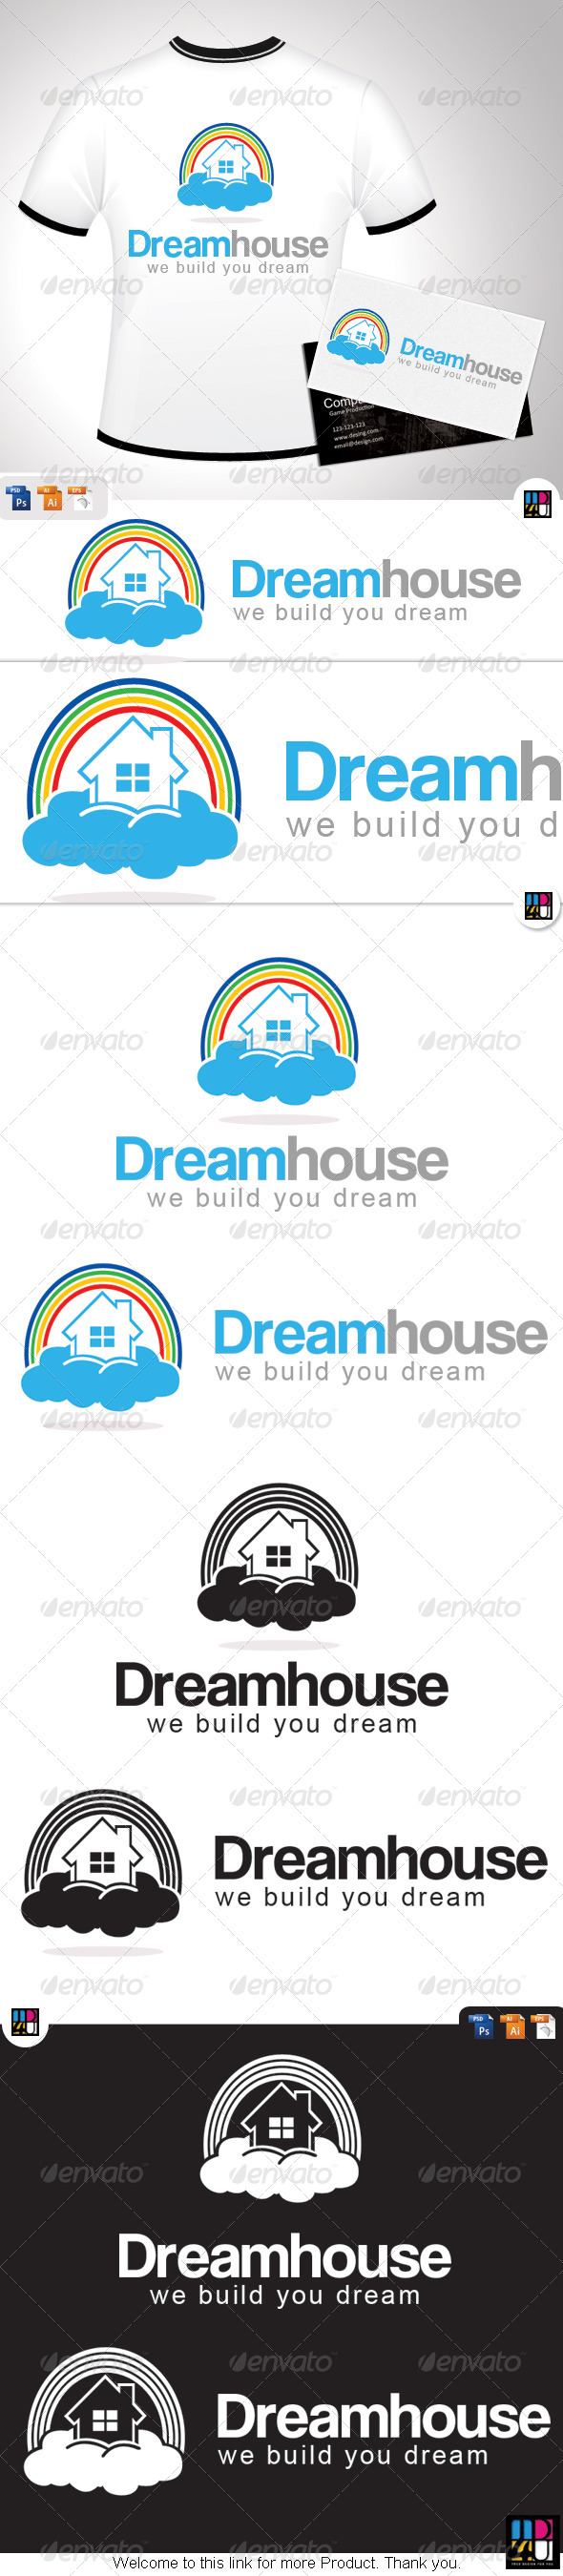 Dream House - We Build Your Dream